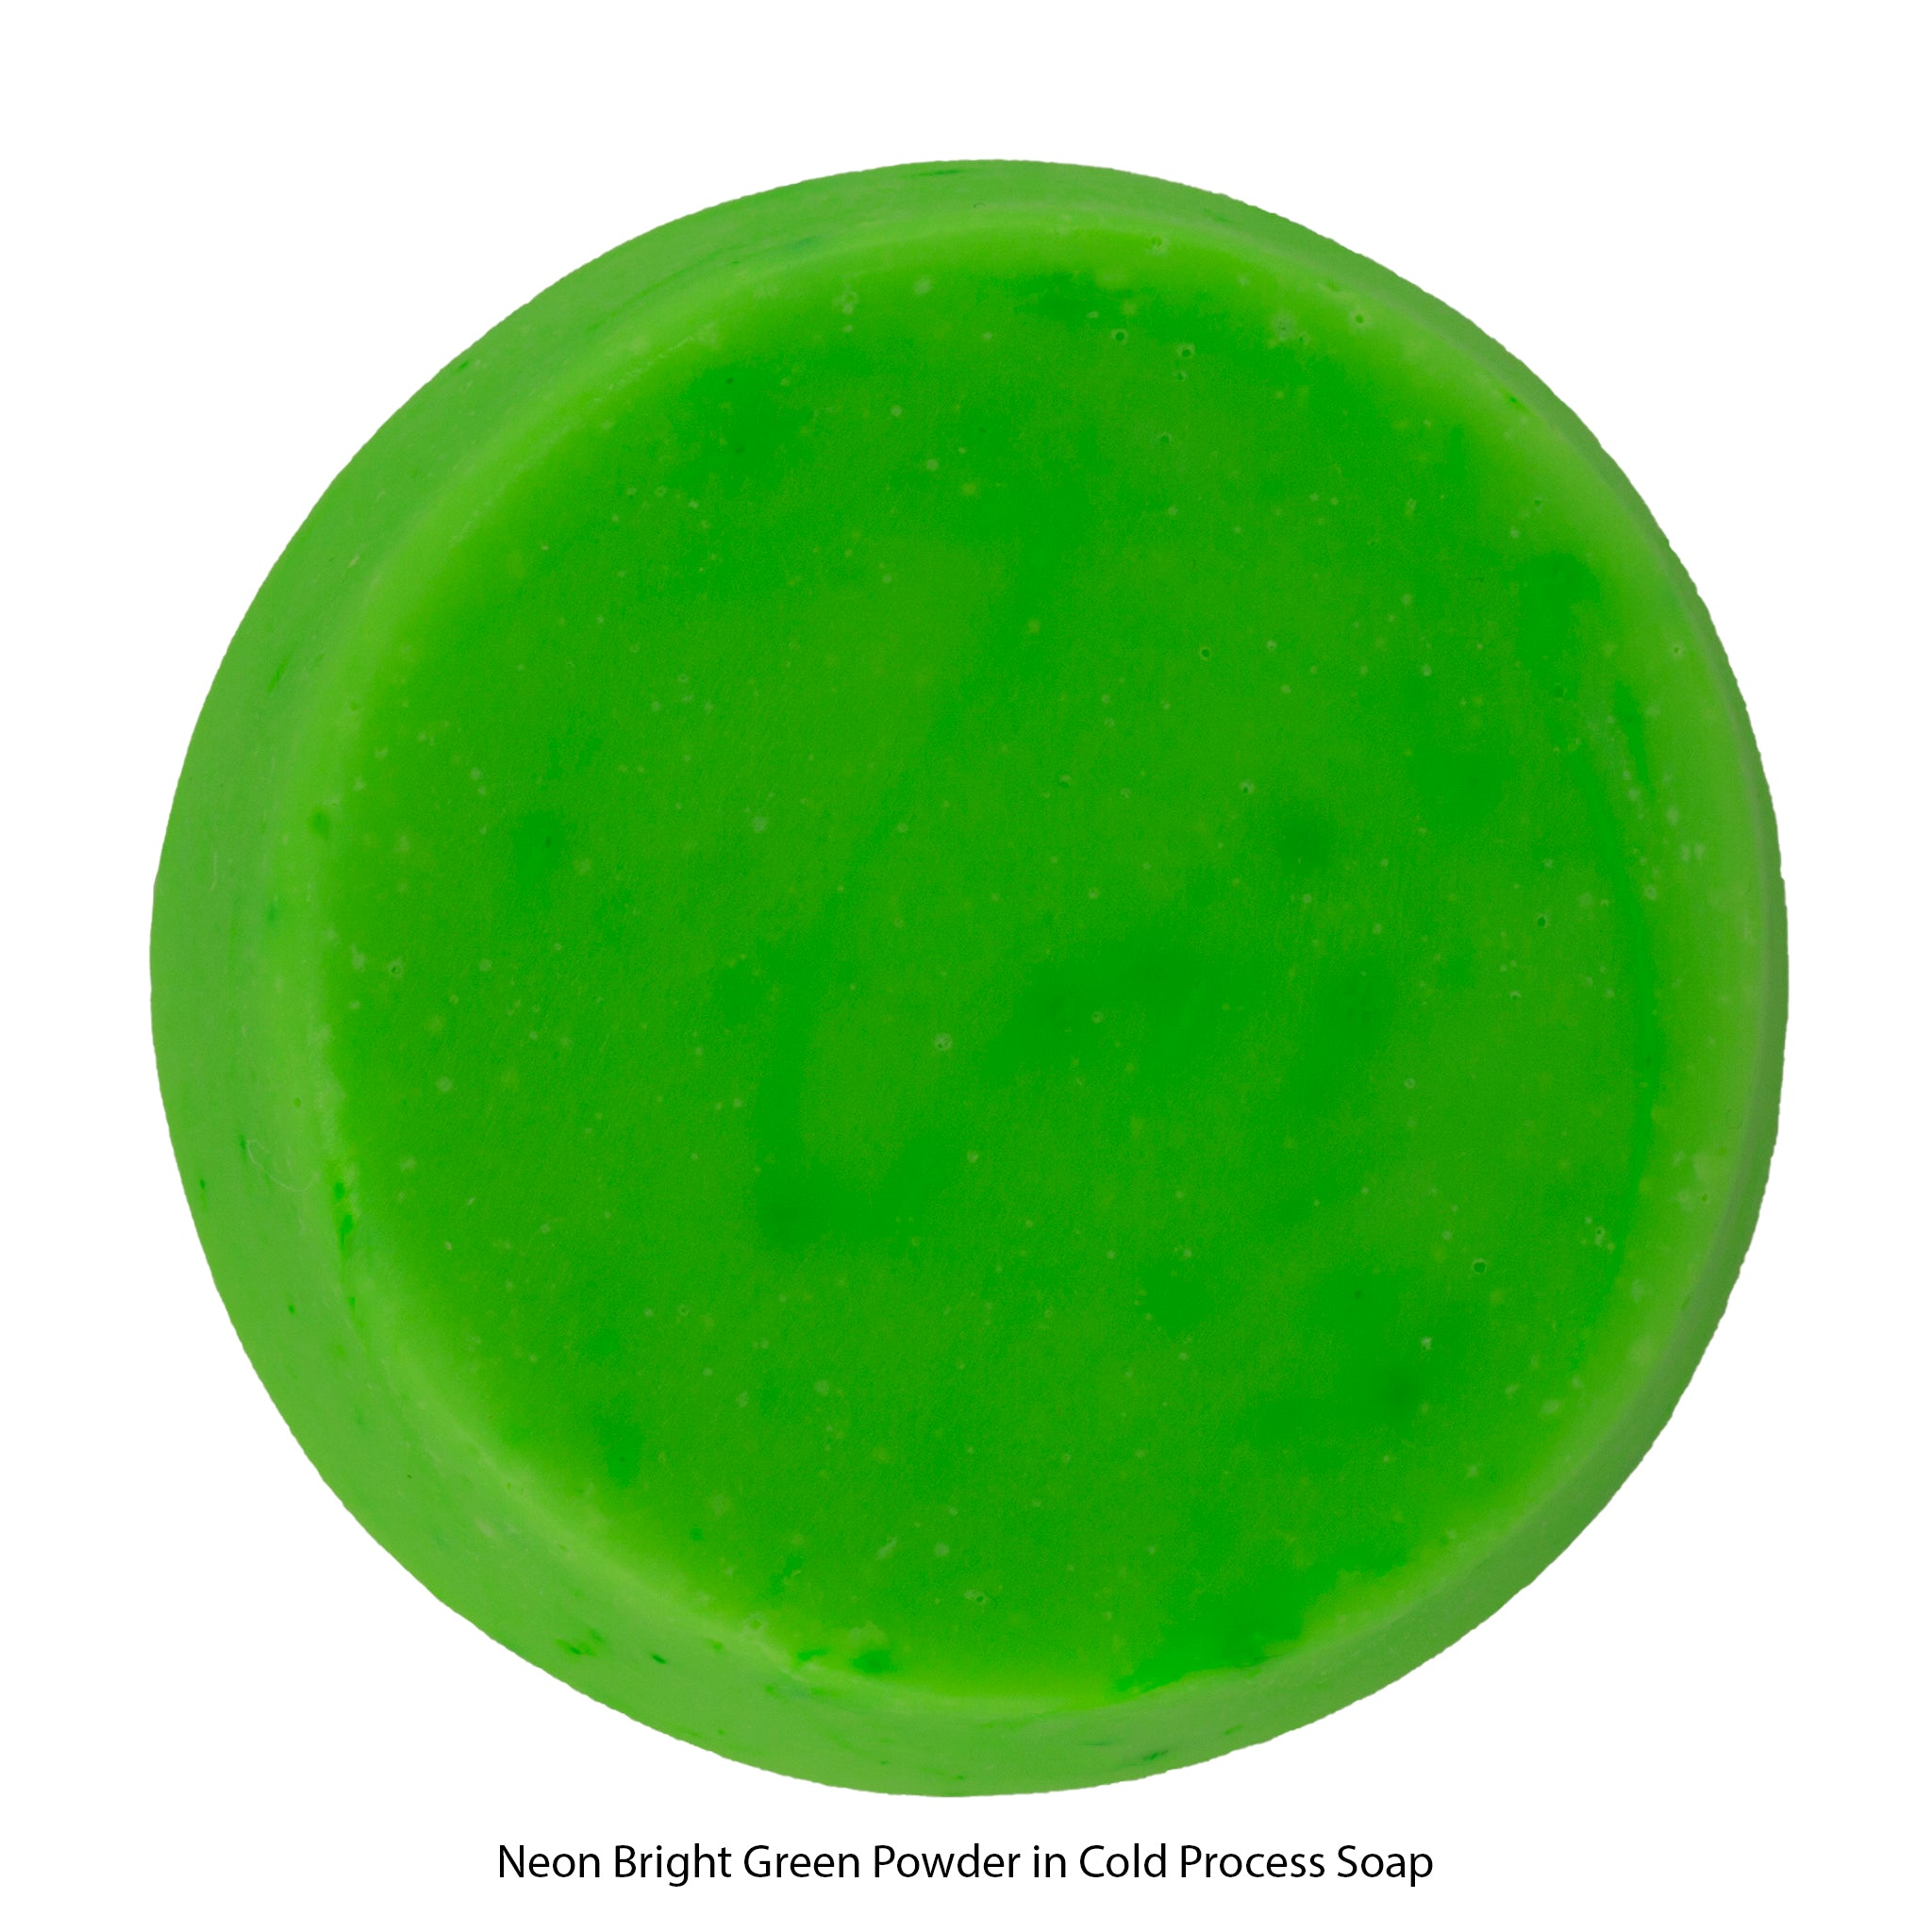 Neon Bright Green Powder